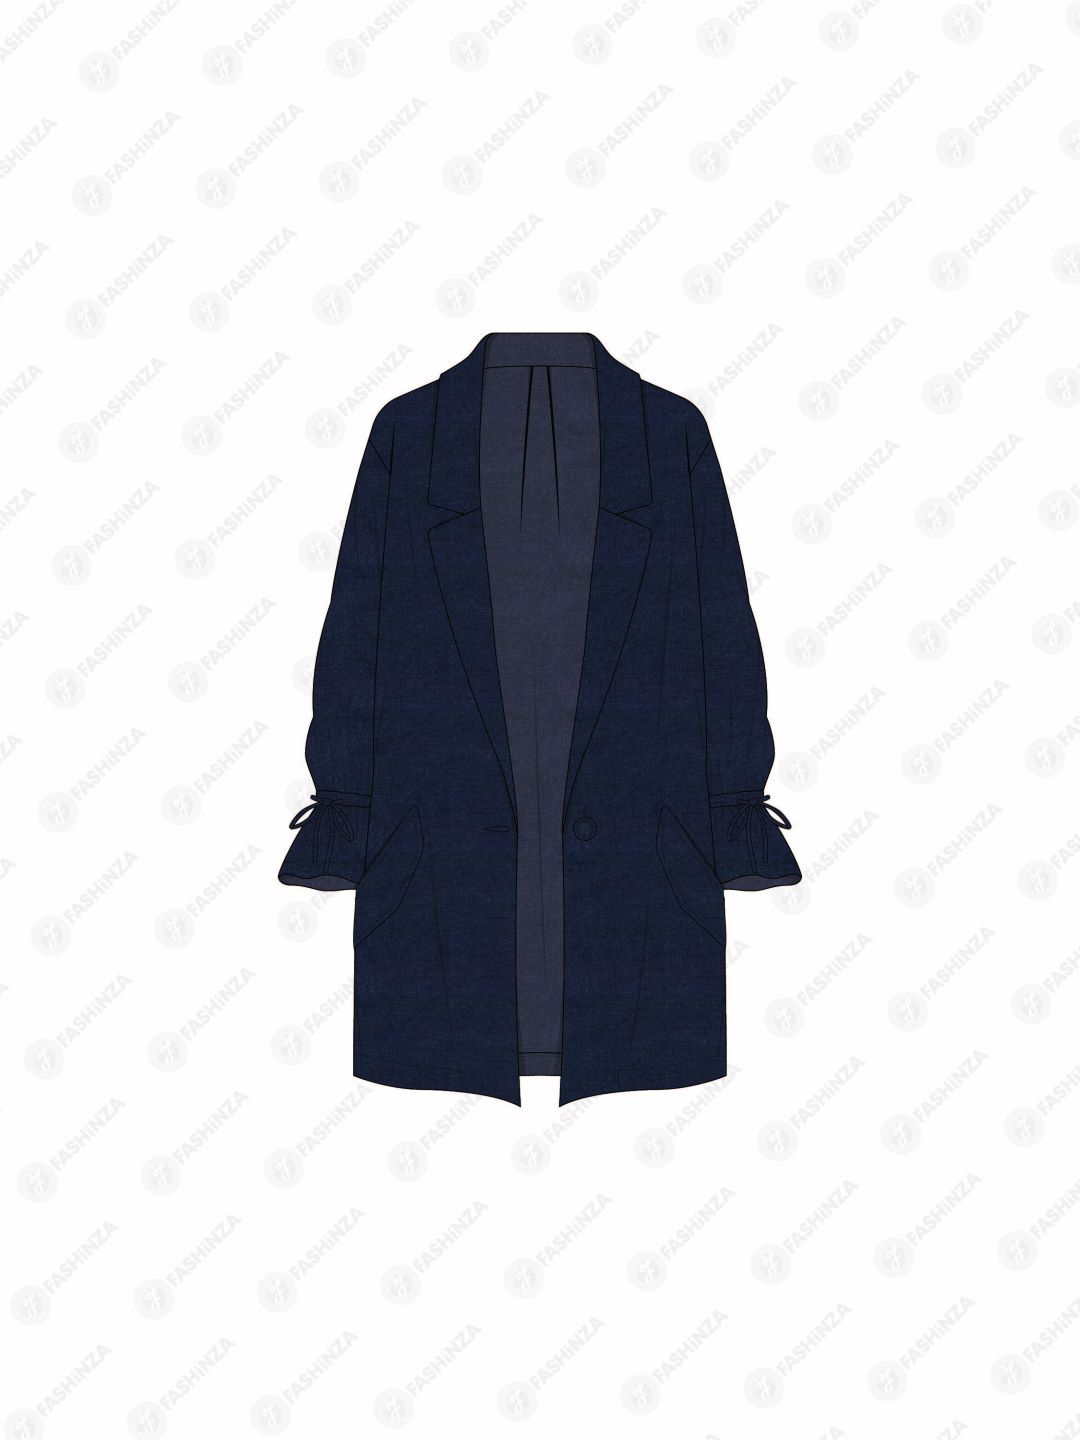 Women’s Loose-Fit Blazer Style Denim Coat